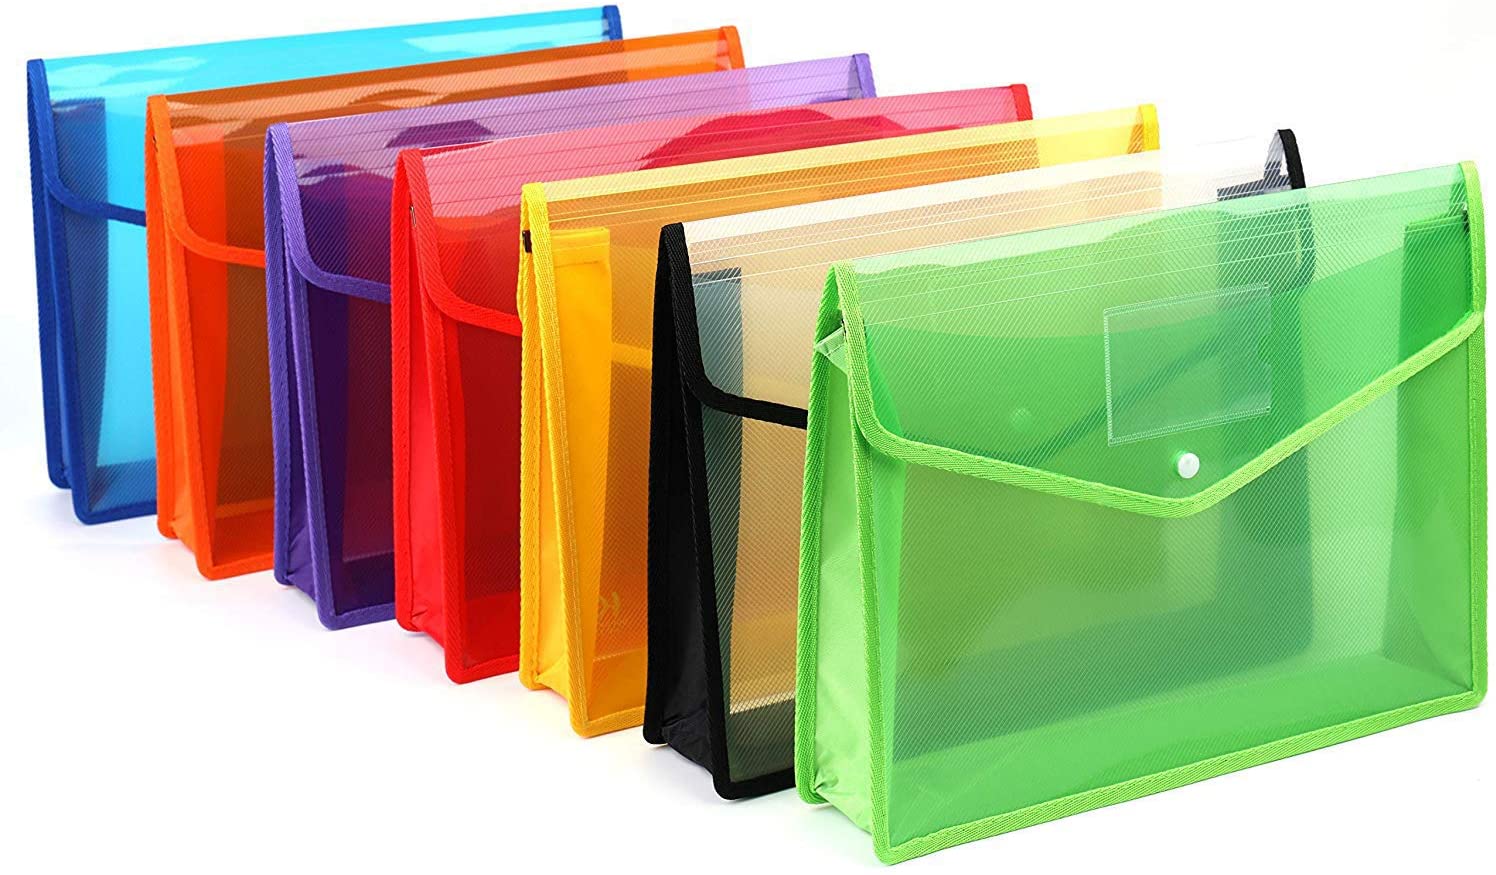 

A4 Plastic Wallet File Folder Envelope,Waterproof Poly Envelope Plastics Files Wallets Document Folders with Button Closure for School